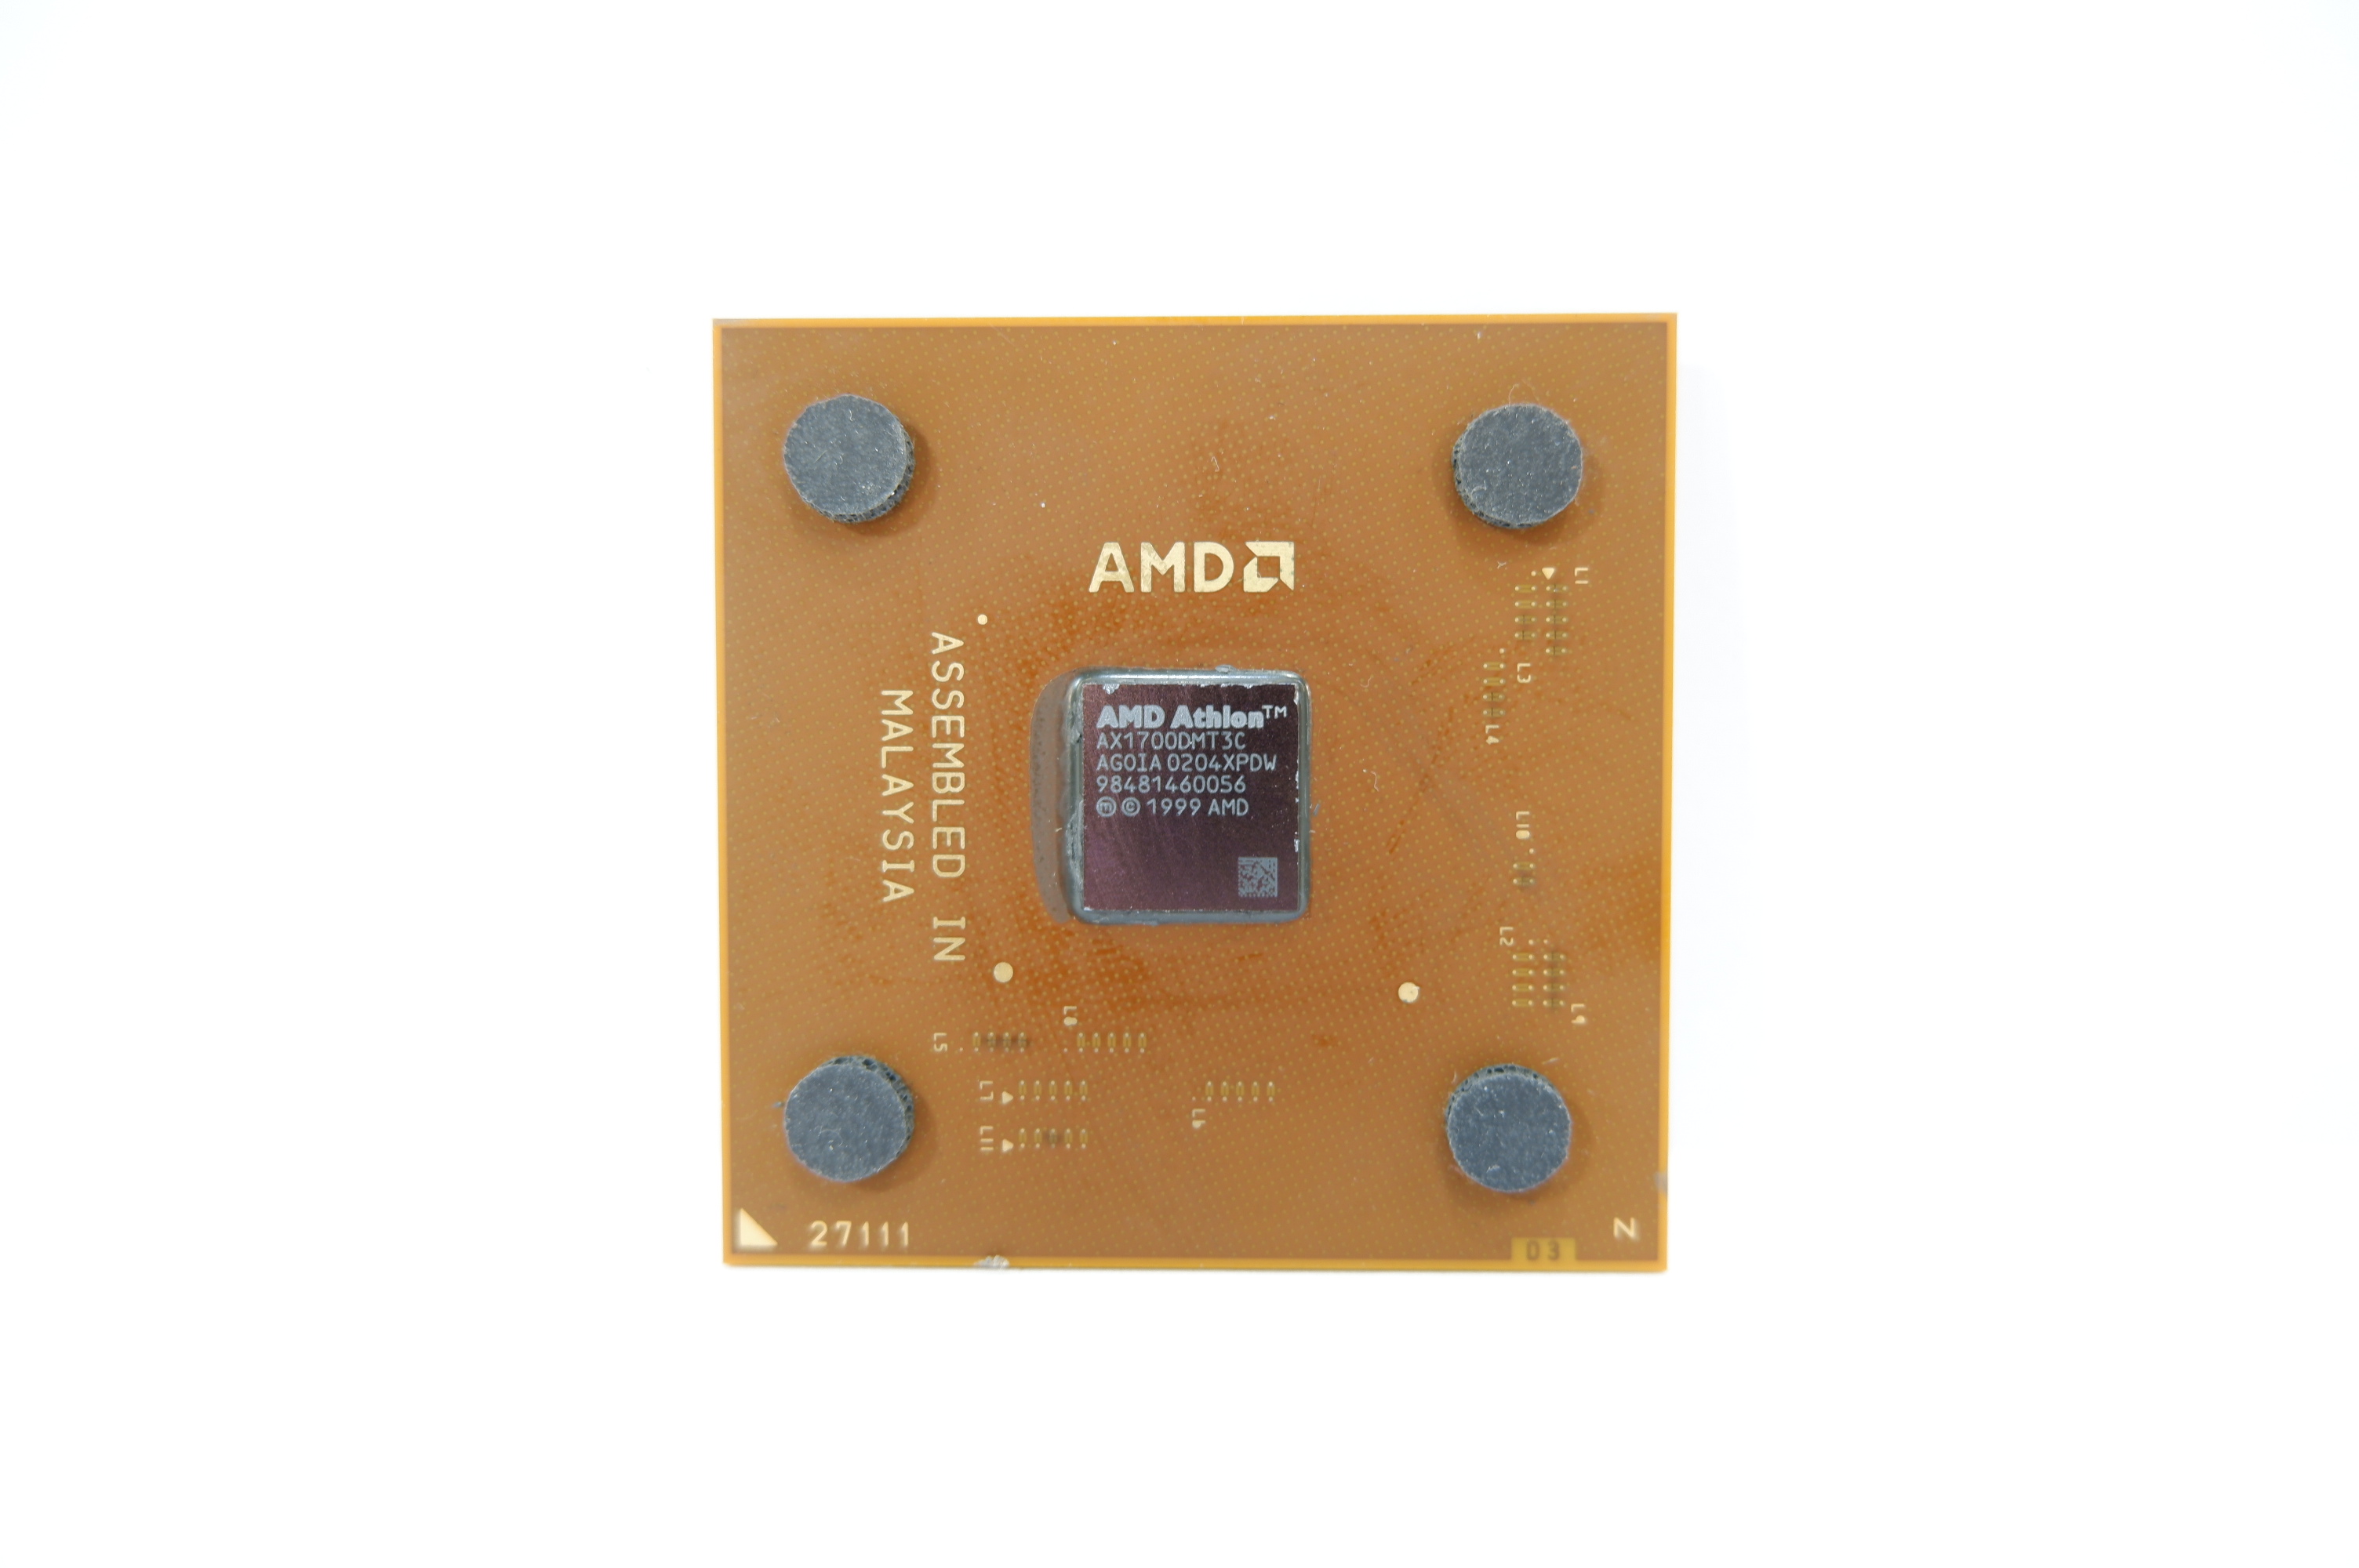 Ax 1700. AMD Athlon XP 1700+. АМД процессор для сокета 462. Athlon 1700+ процессор. AMD Athlon 462 сокет.